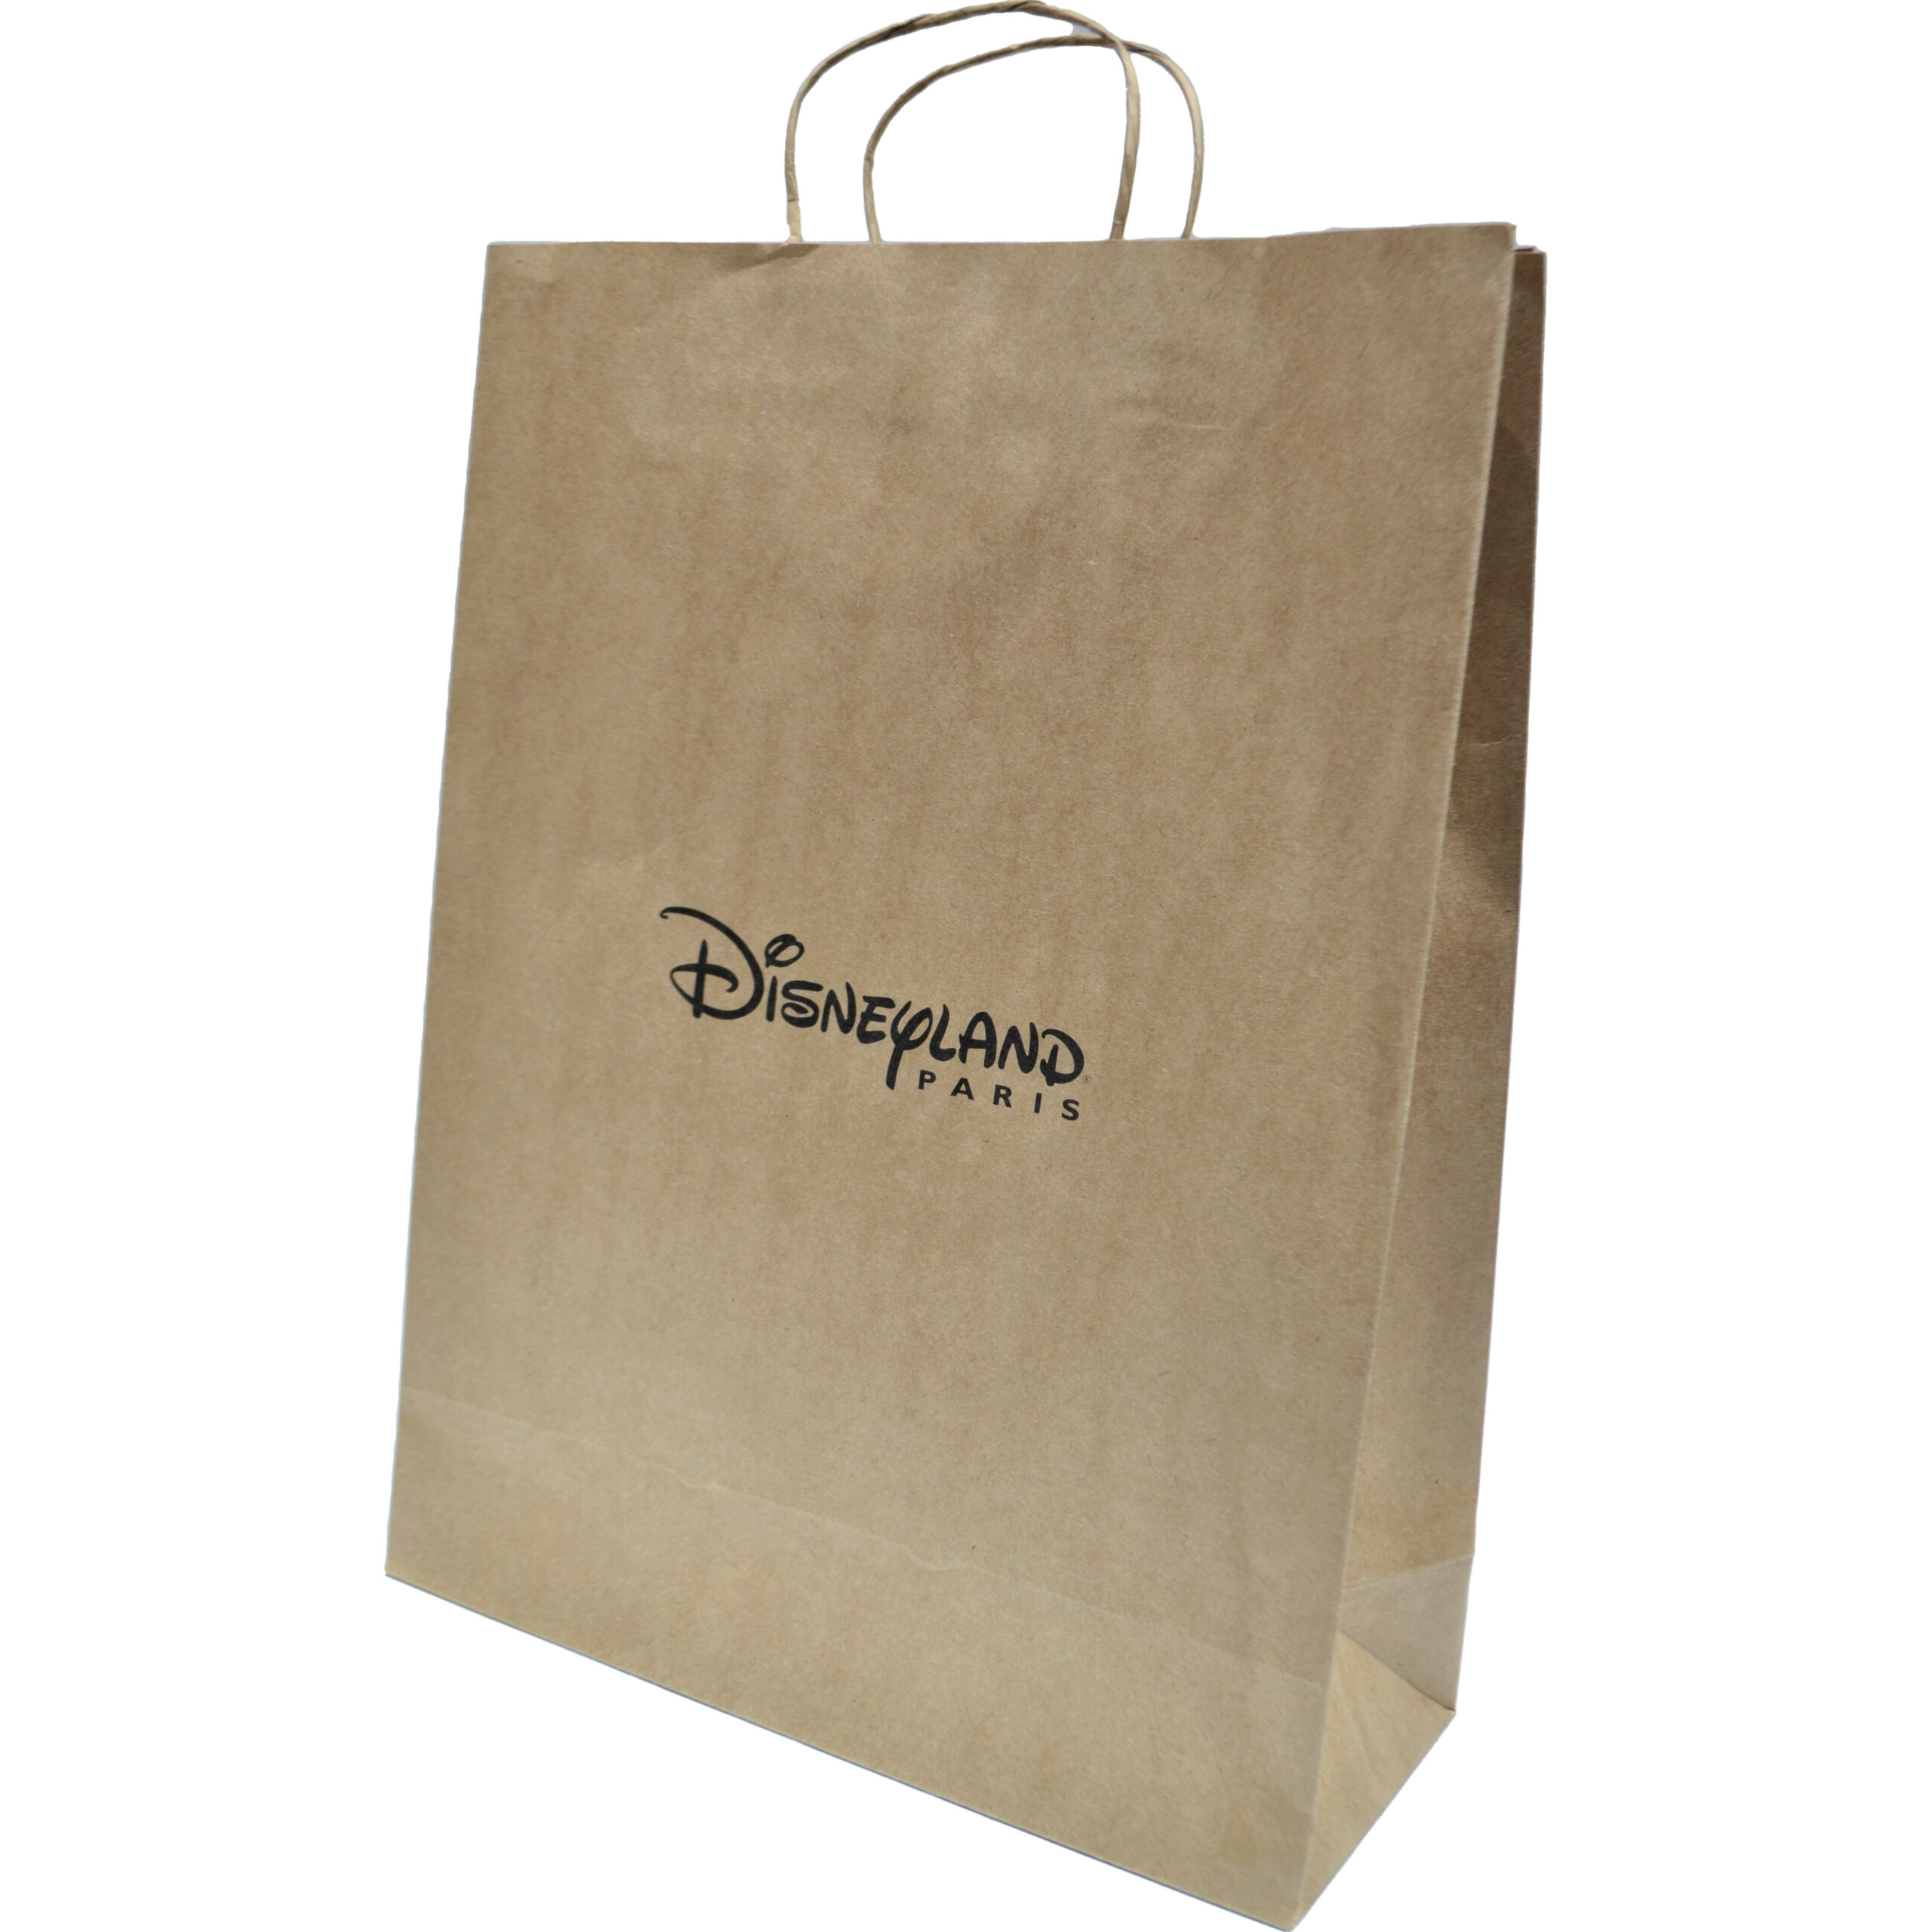 Disneyland Twisted Handle Paper Bag